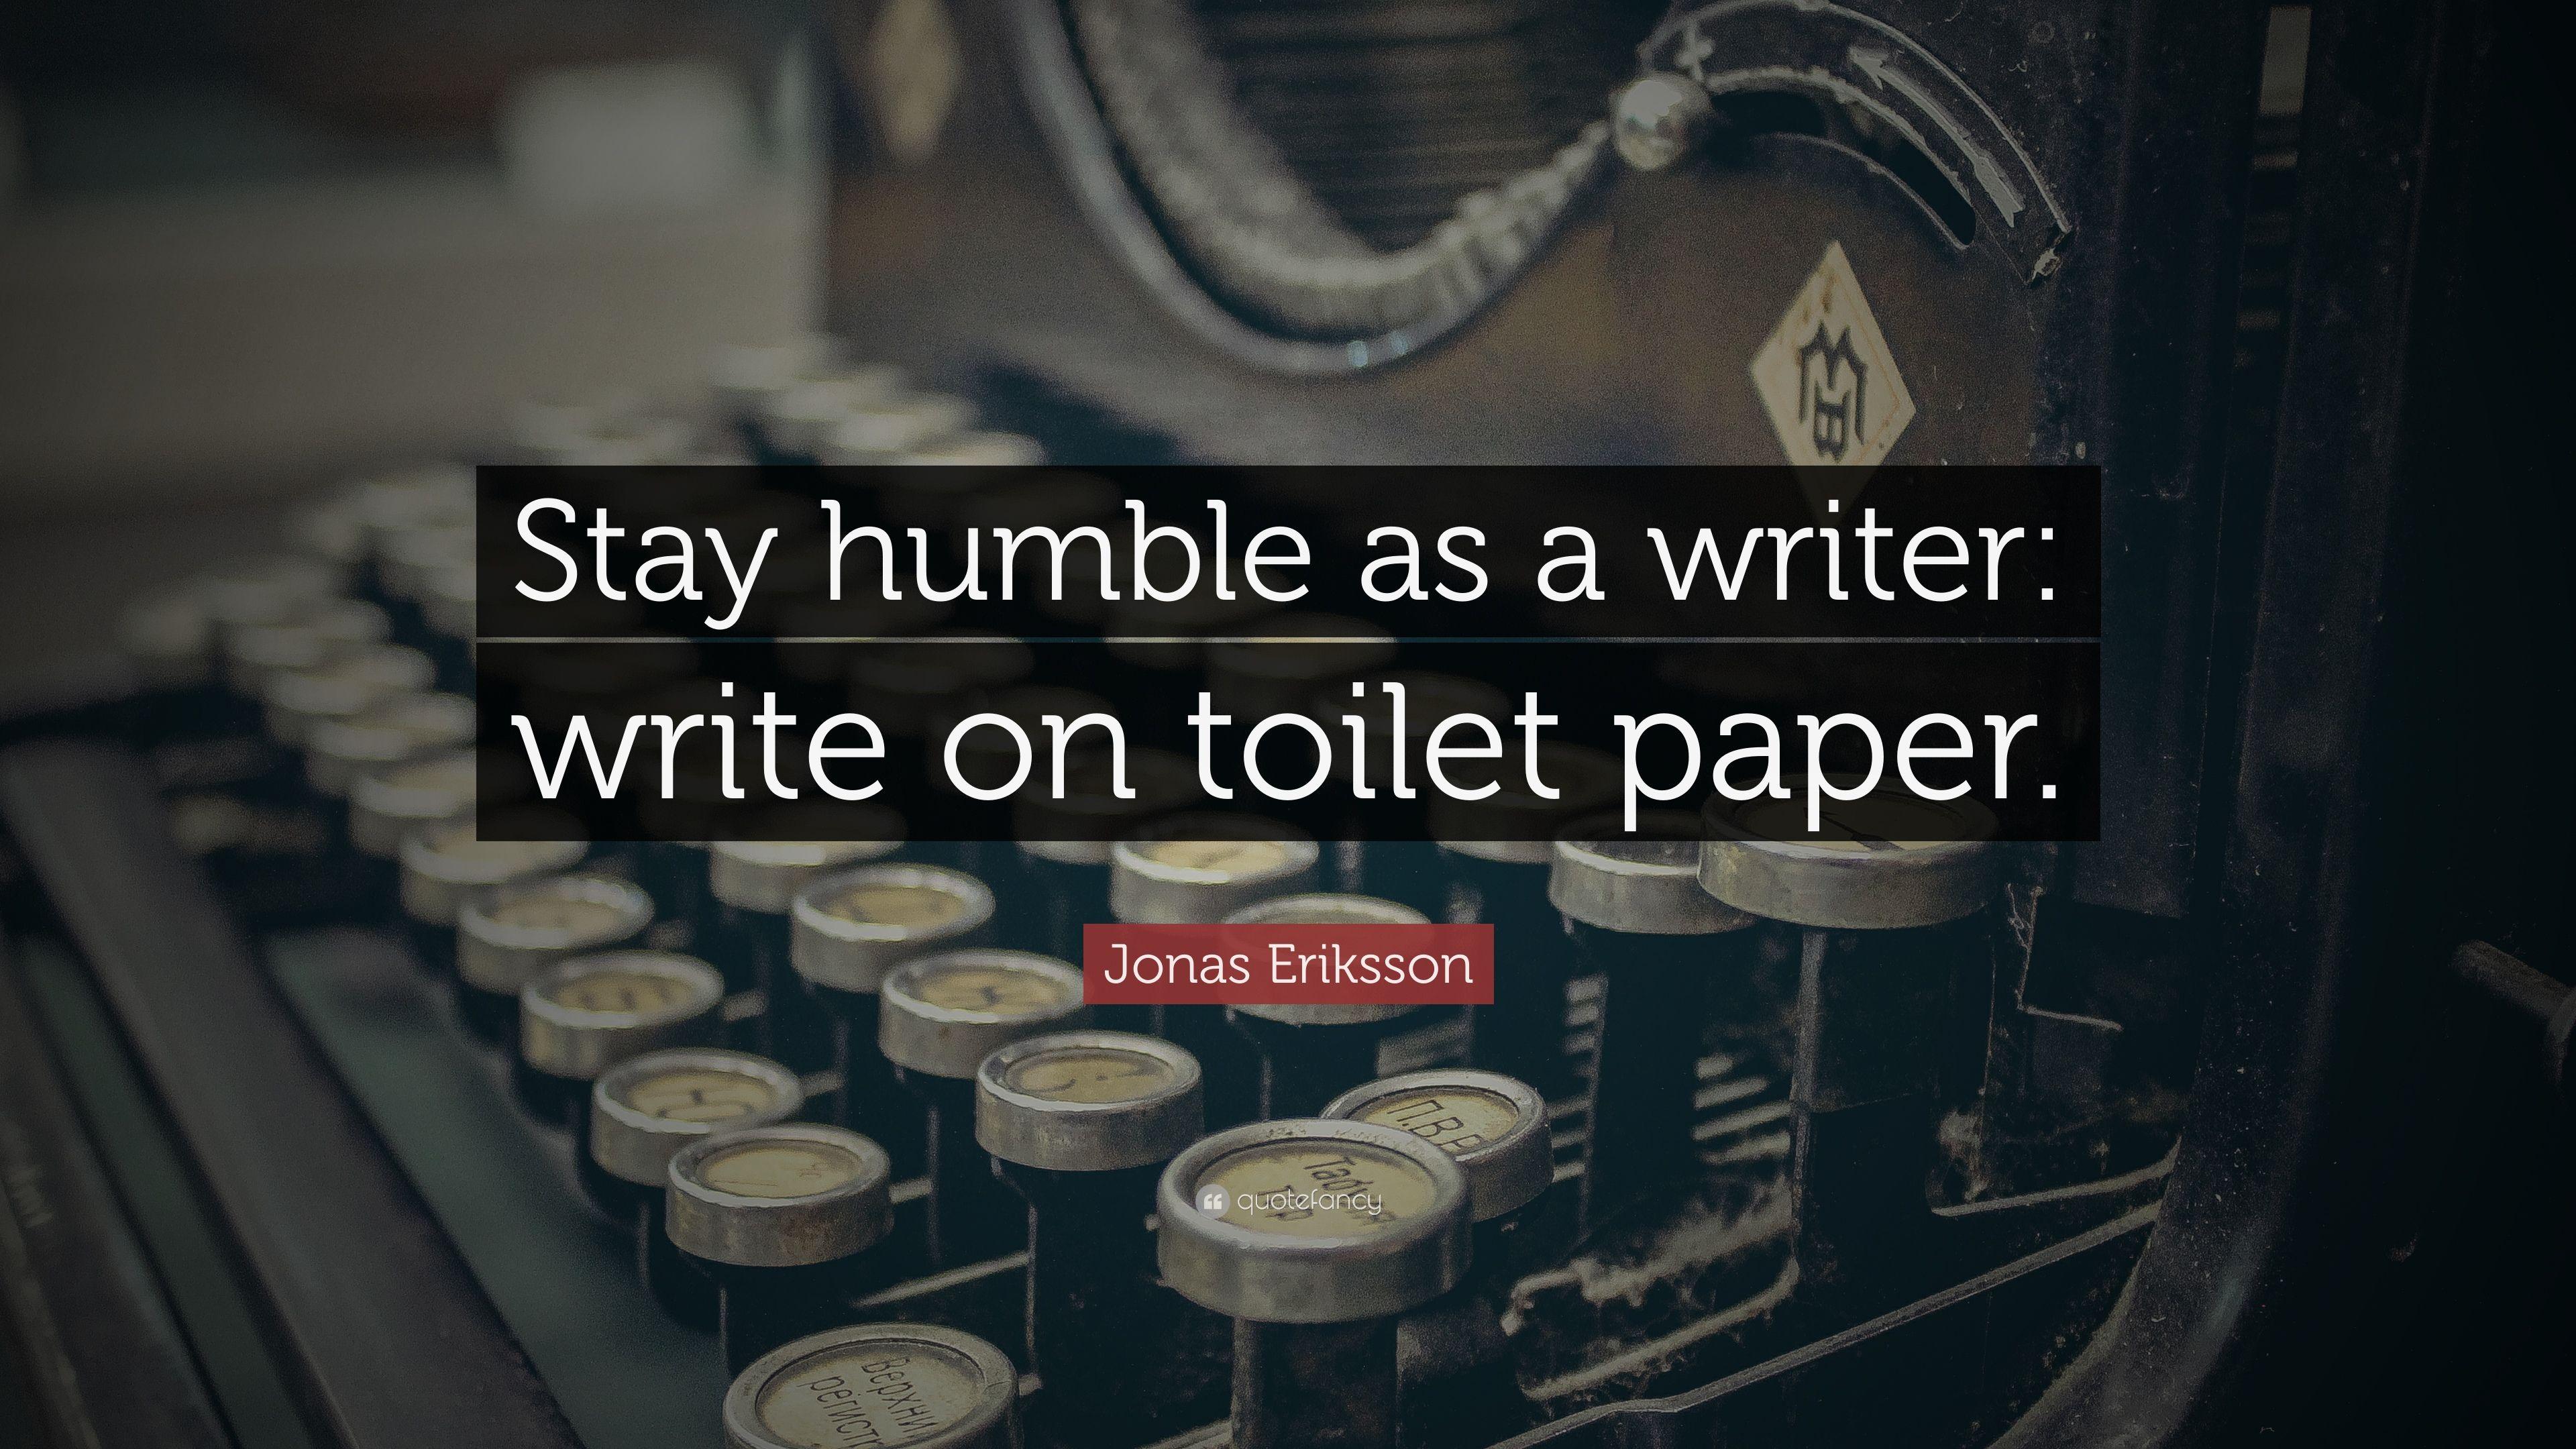 Jonas Eriksson Quote: “Stay humble as a writer: write on toilet